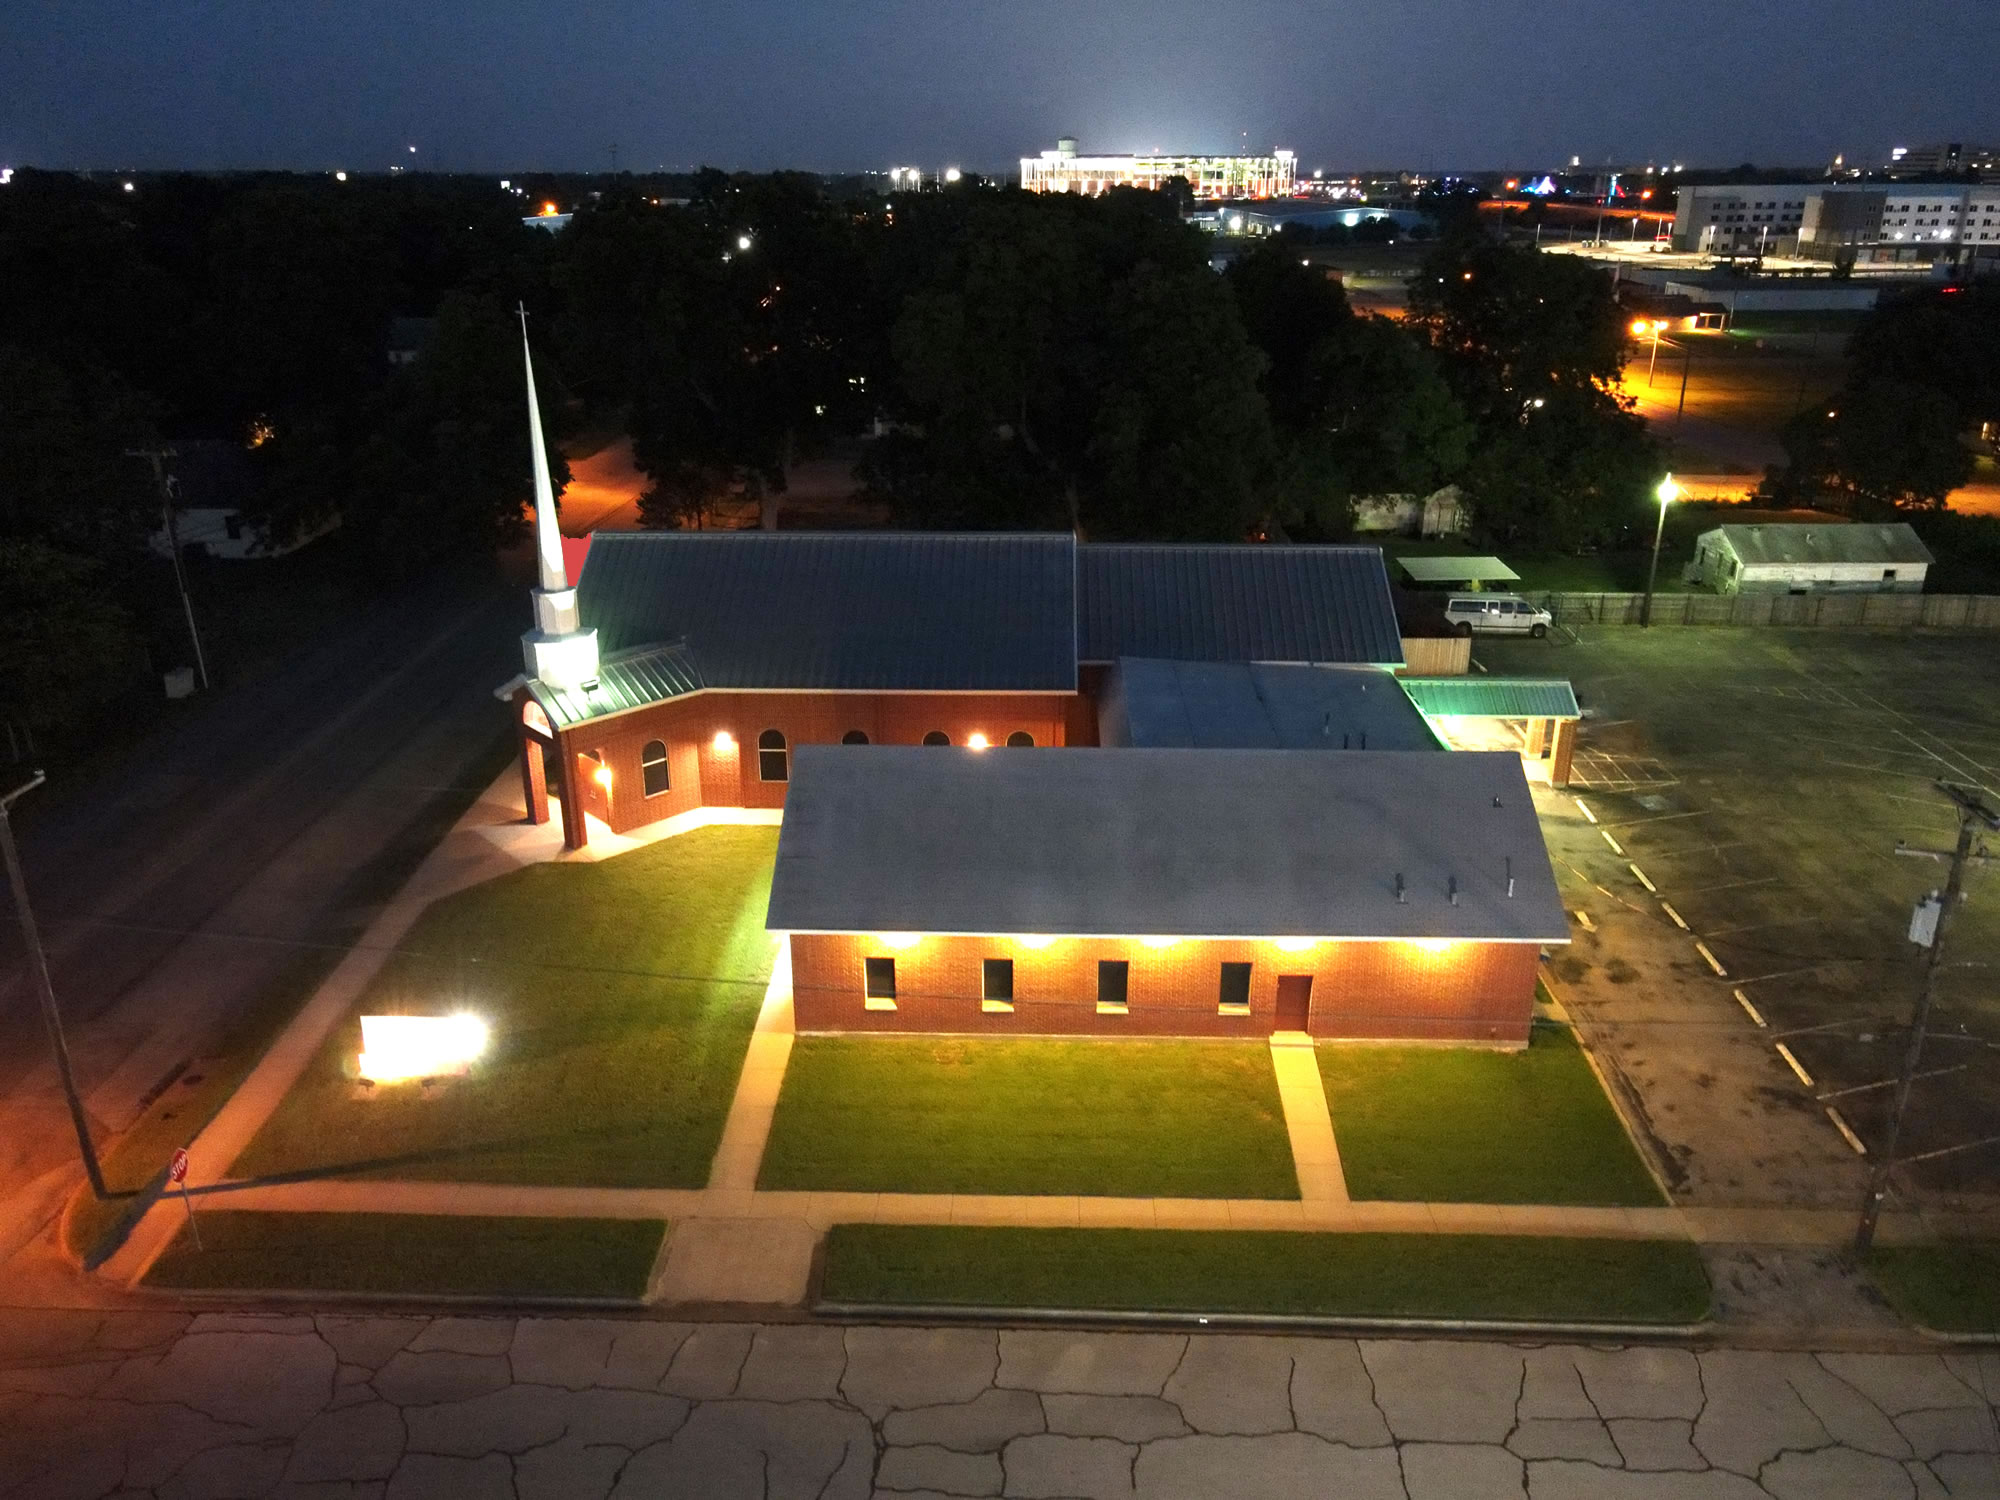 Carter's Church of God in Christ - Church Building Waco, Texas